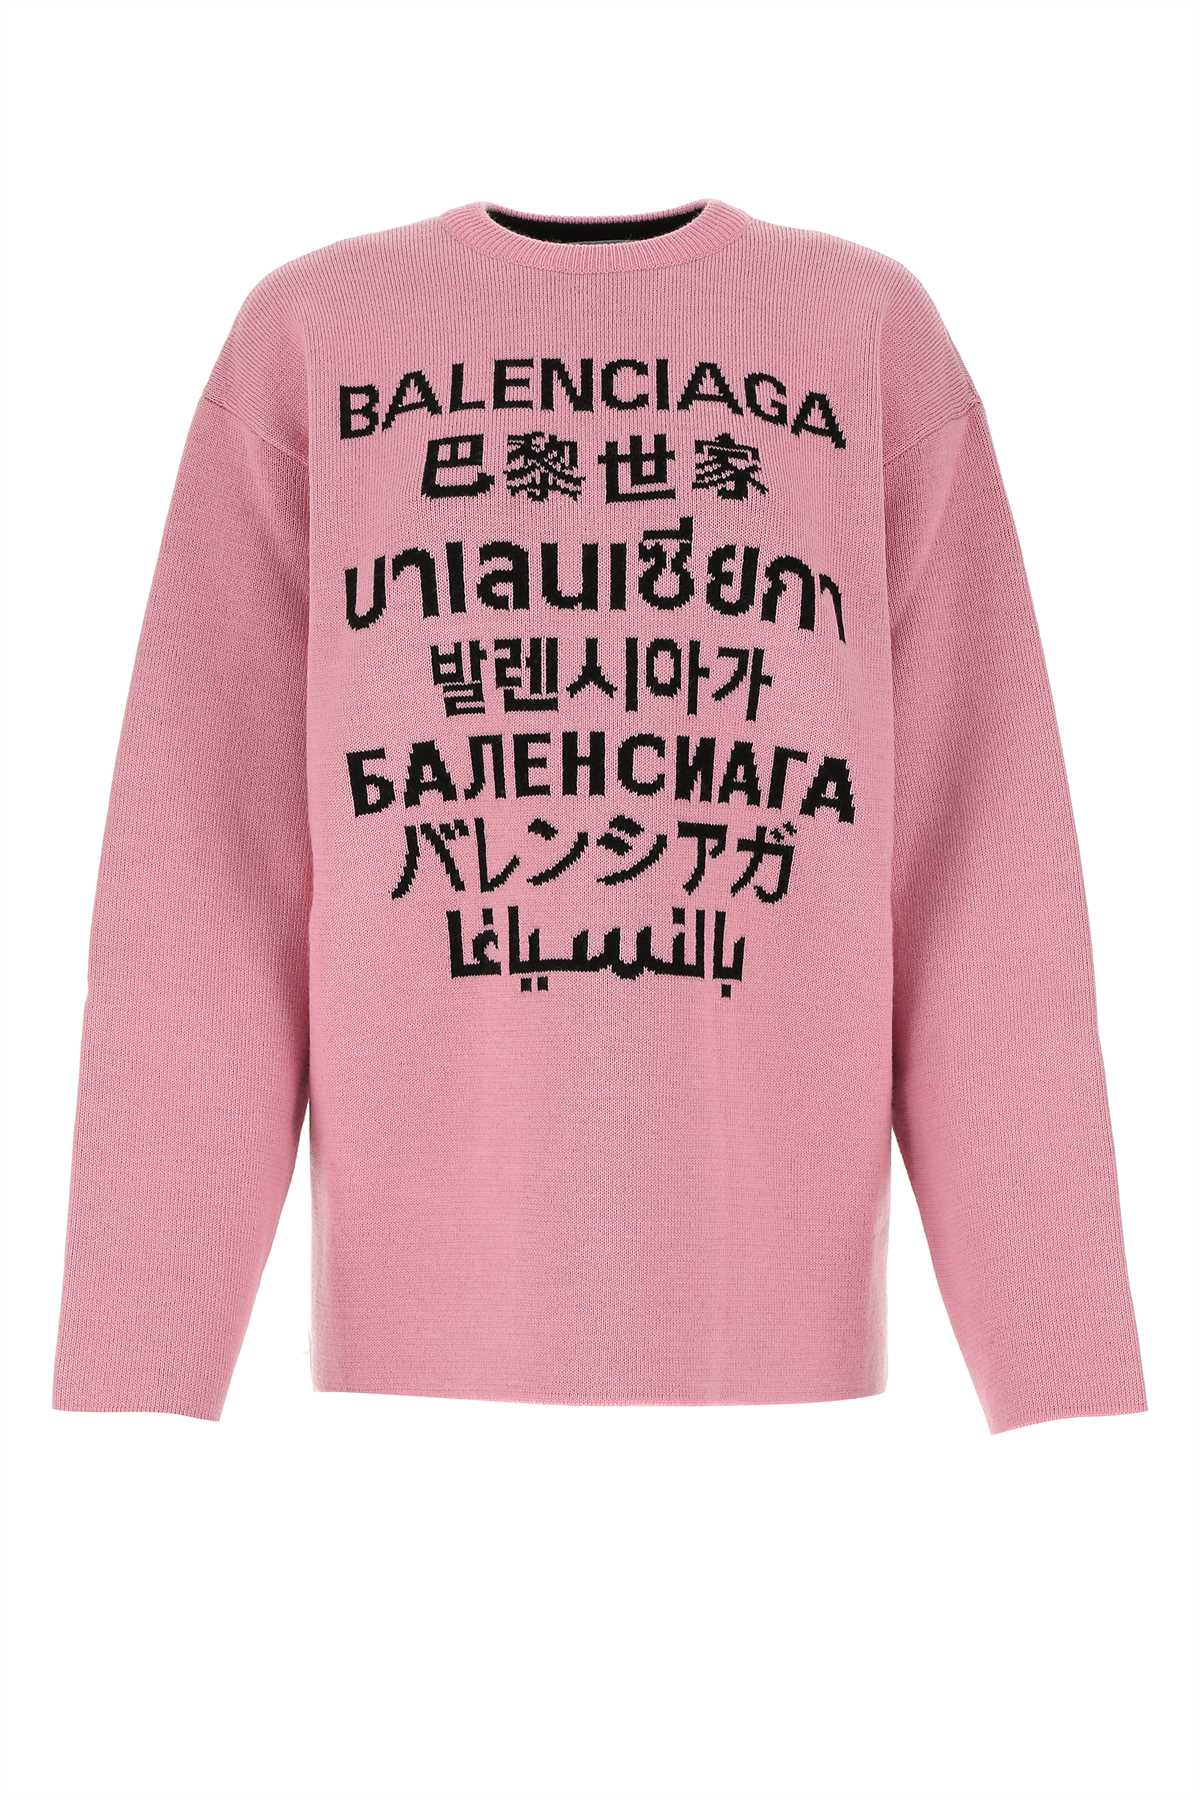 Balenciaga Pink Stretch Wool Blend Oversize Sweater